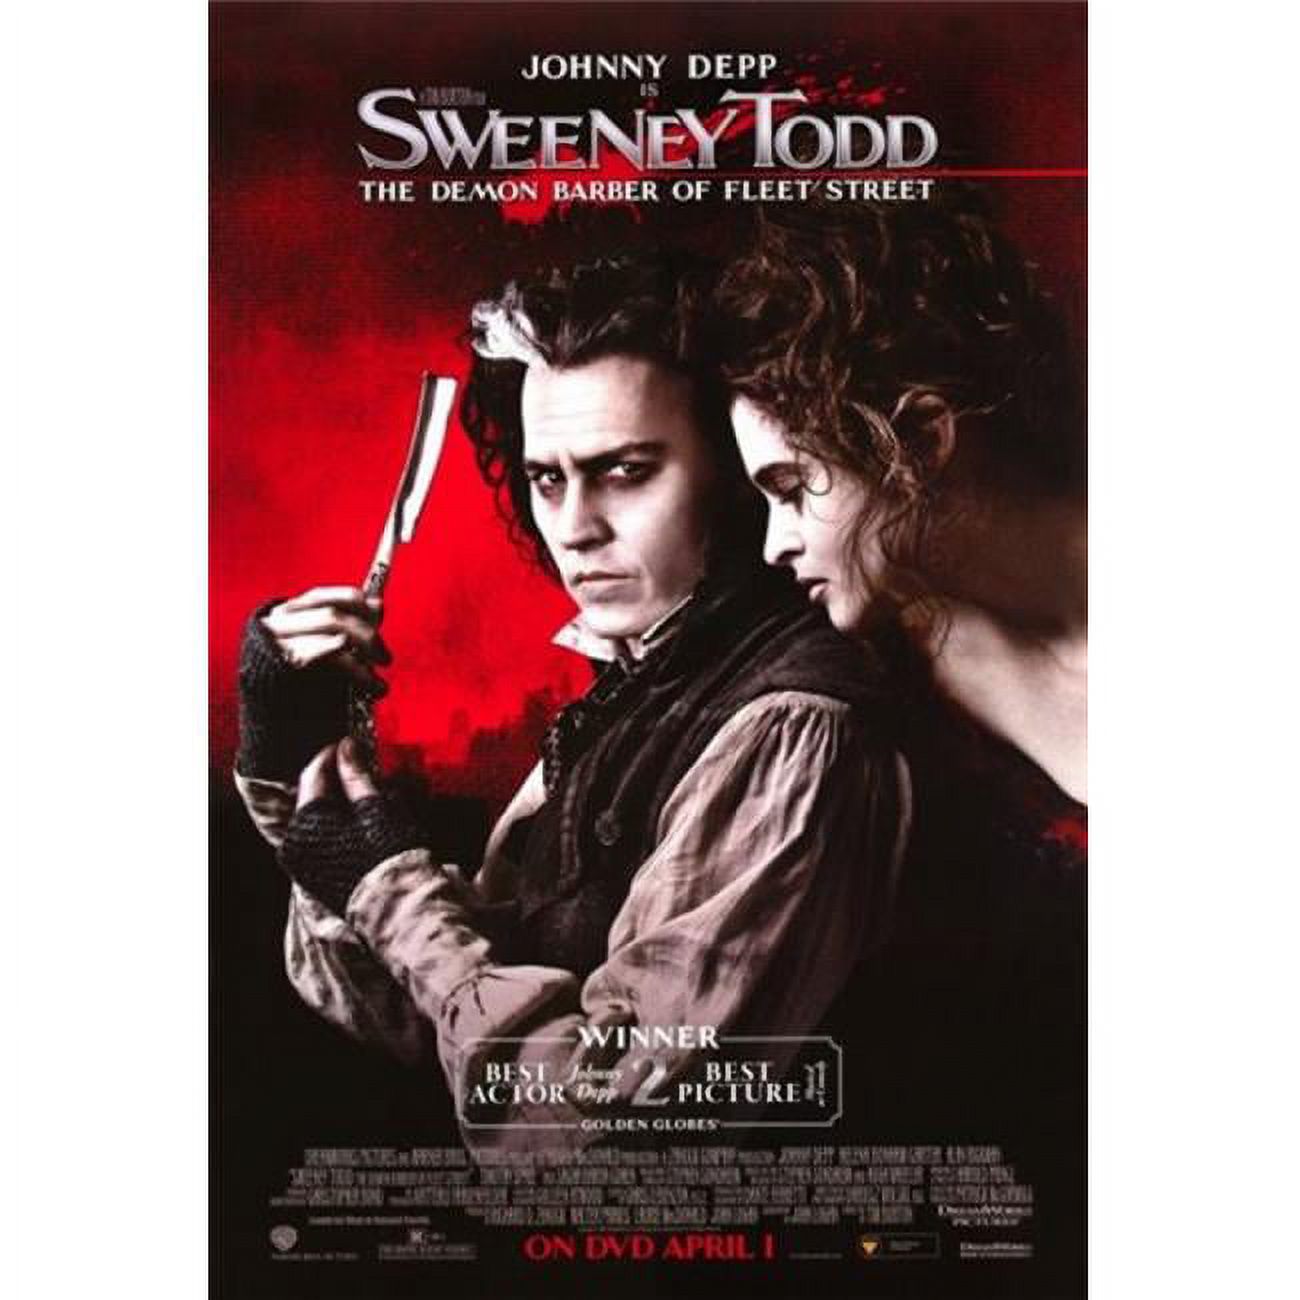 Sweeney Todd The Demon Barber of Fleet Street Movie Poster, 11 x 17 - image 1 of 1